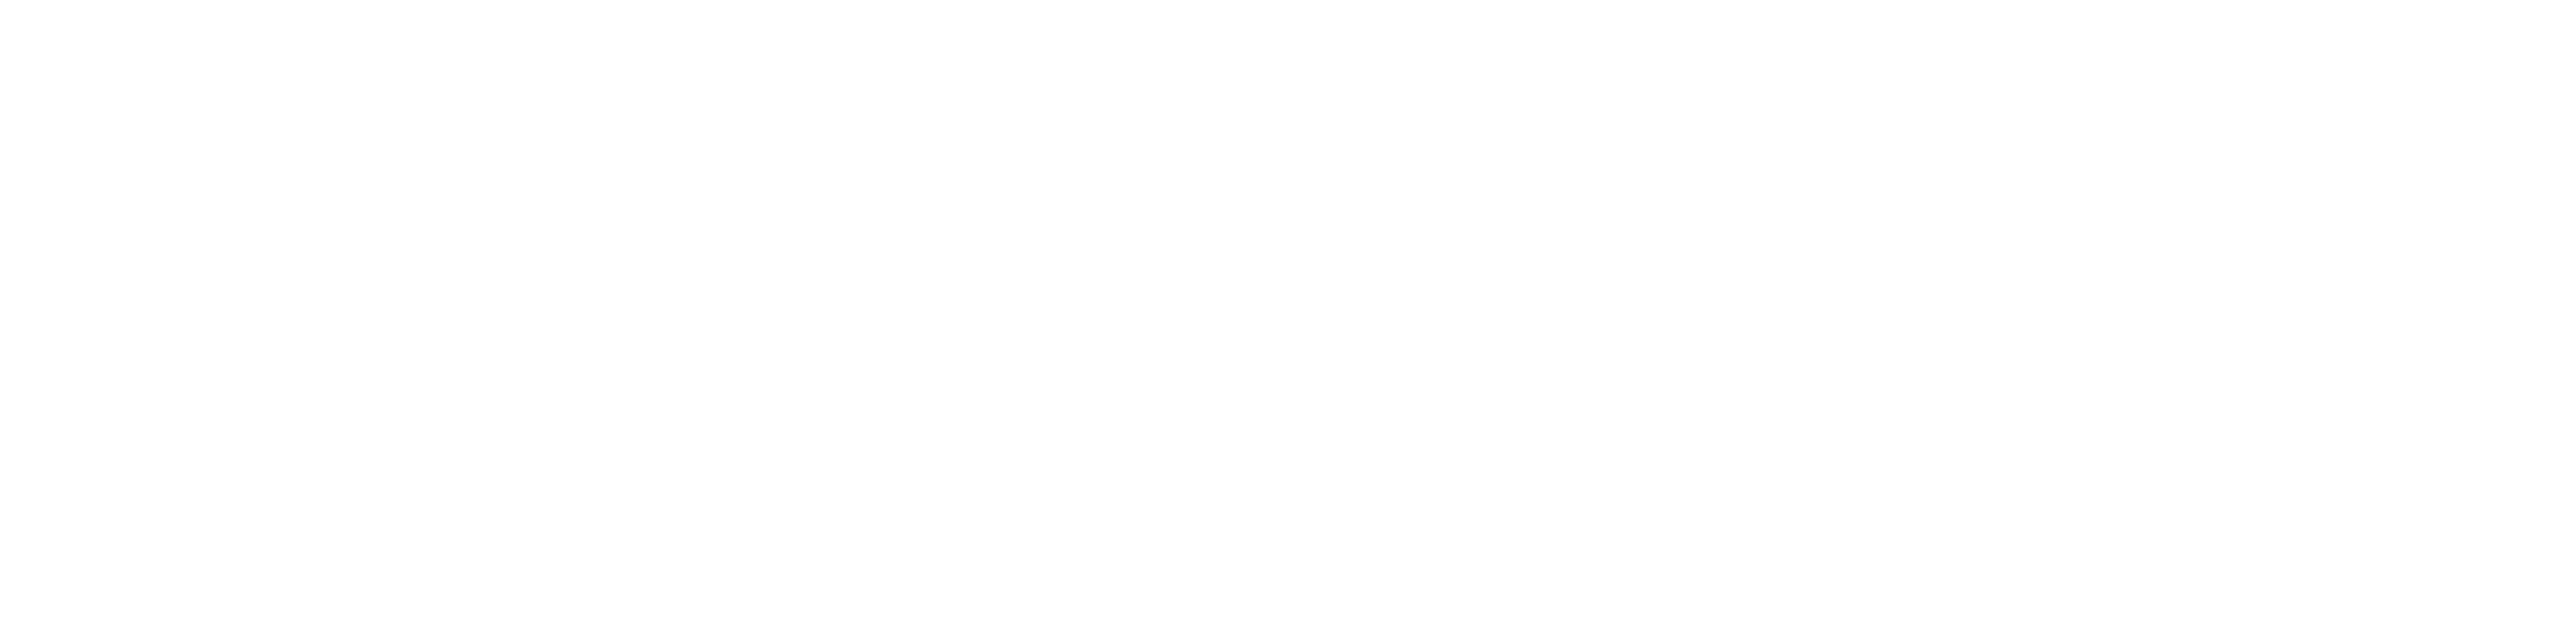 Bedford Business Association